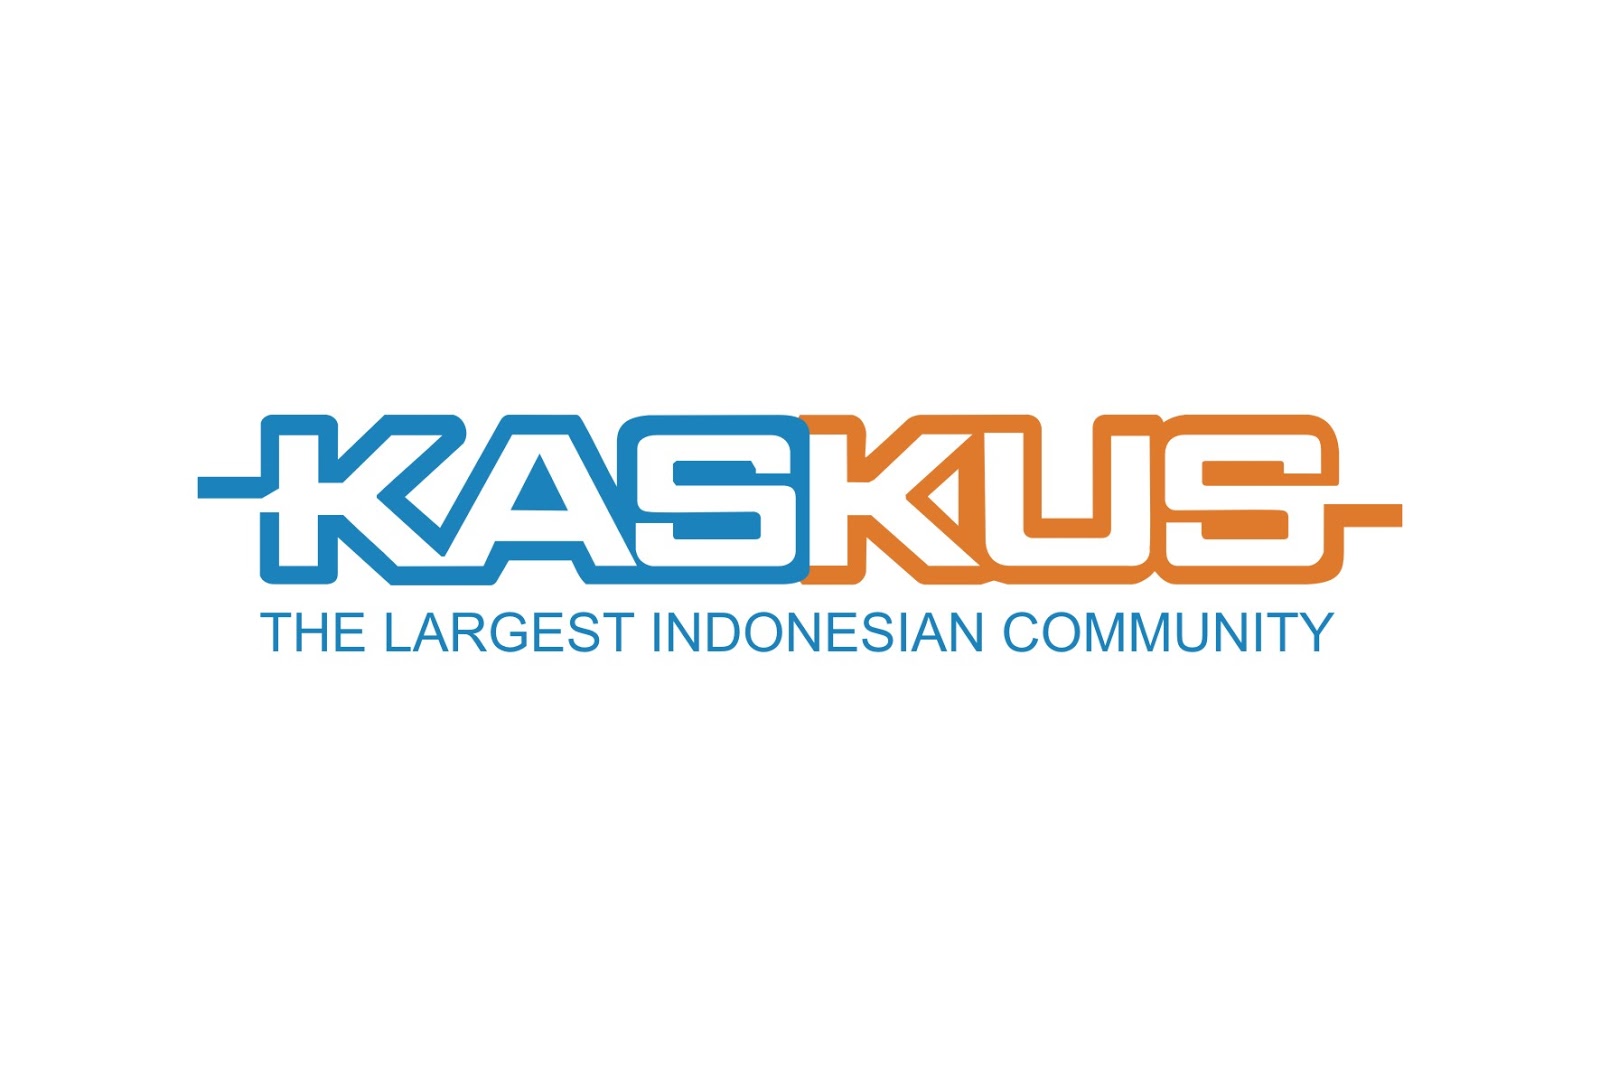  Kaskus  Logo